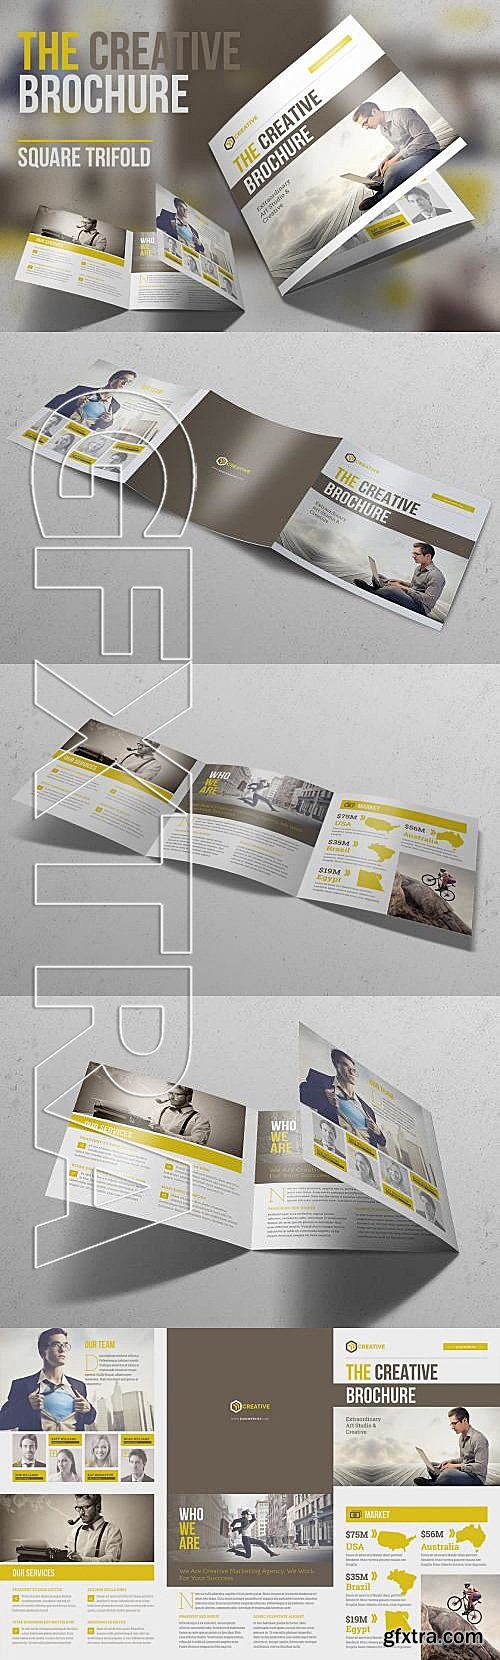 CM - The Creative Brochure - Square 3fold 589500